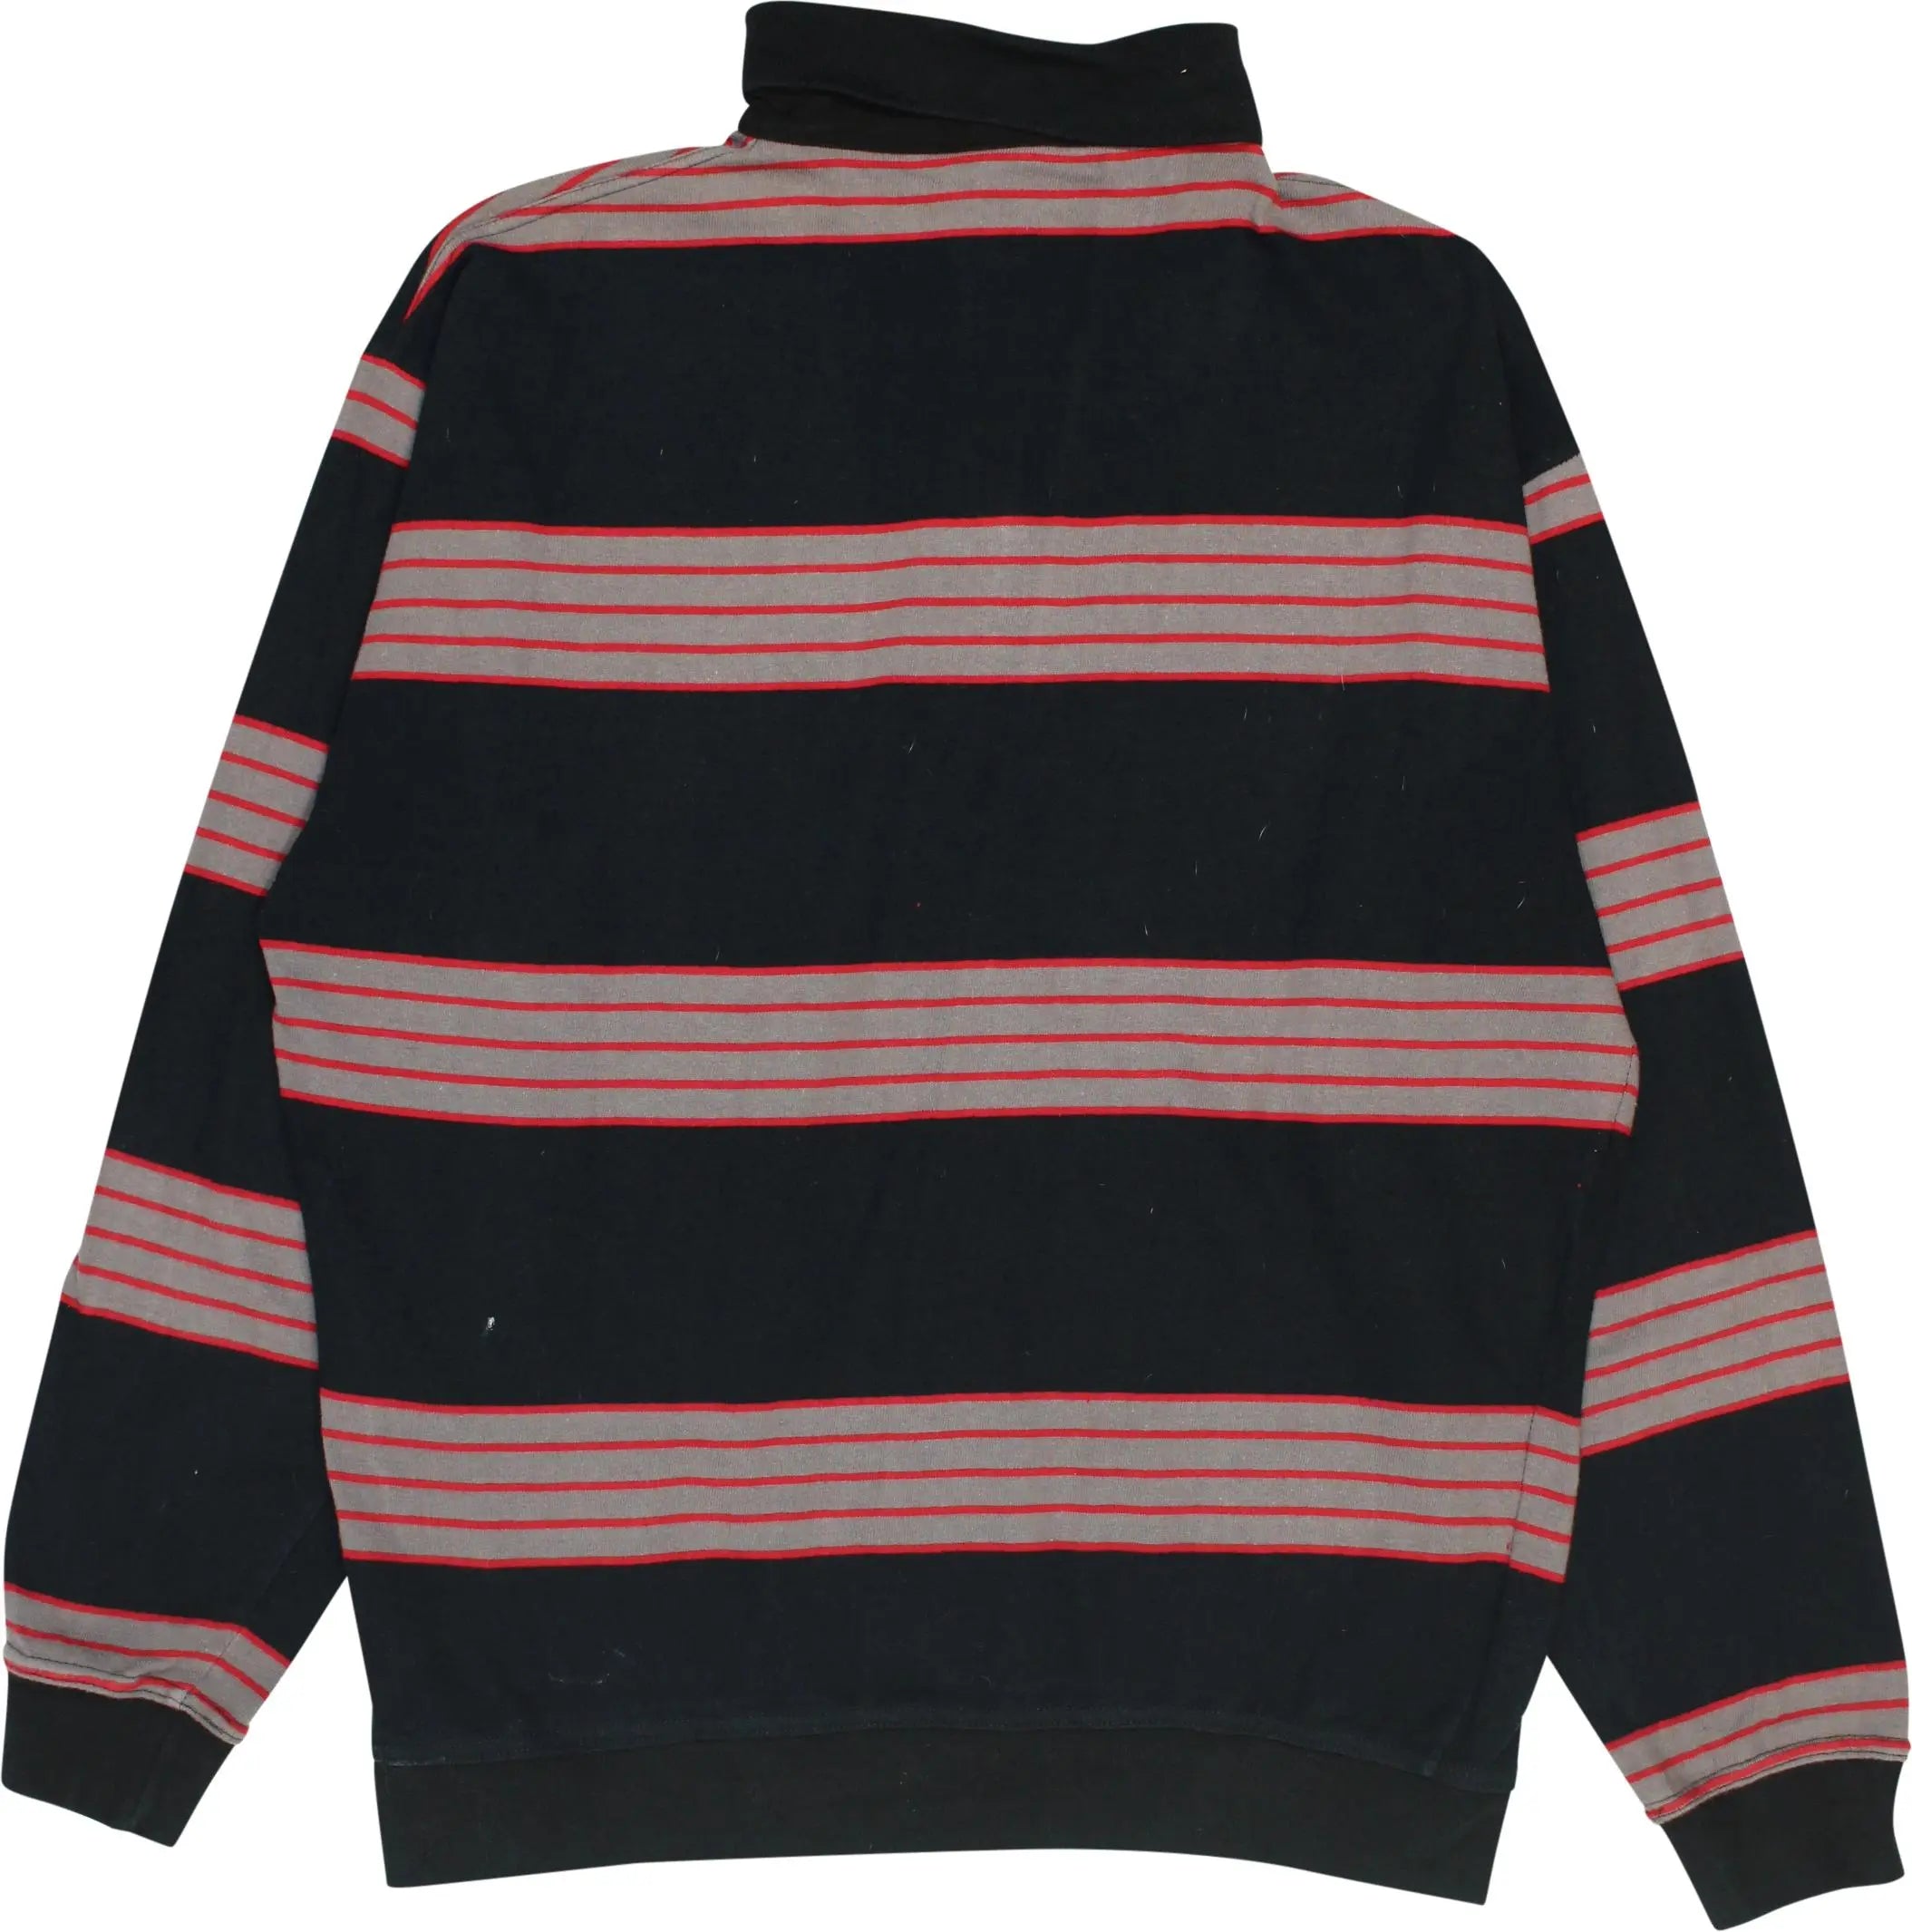 Portonova - Long Sleeve Polo Shirt- ThriftTale.com - Vintage and second handclothing